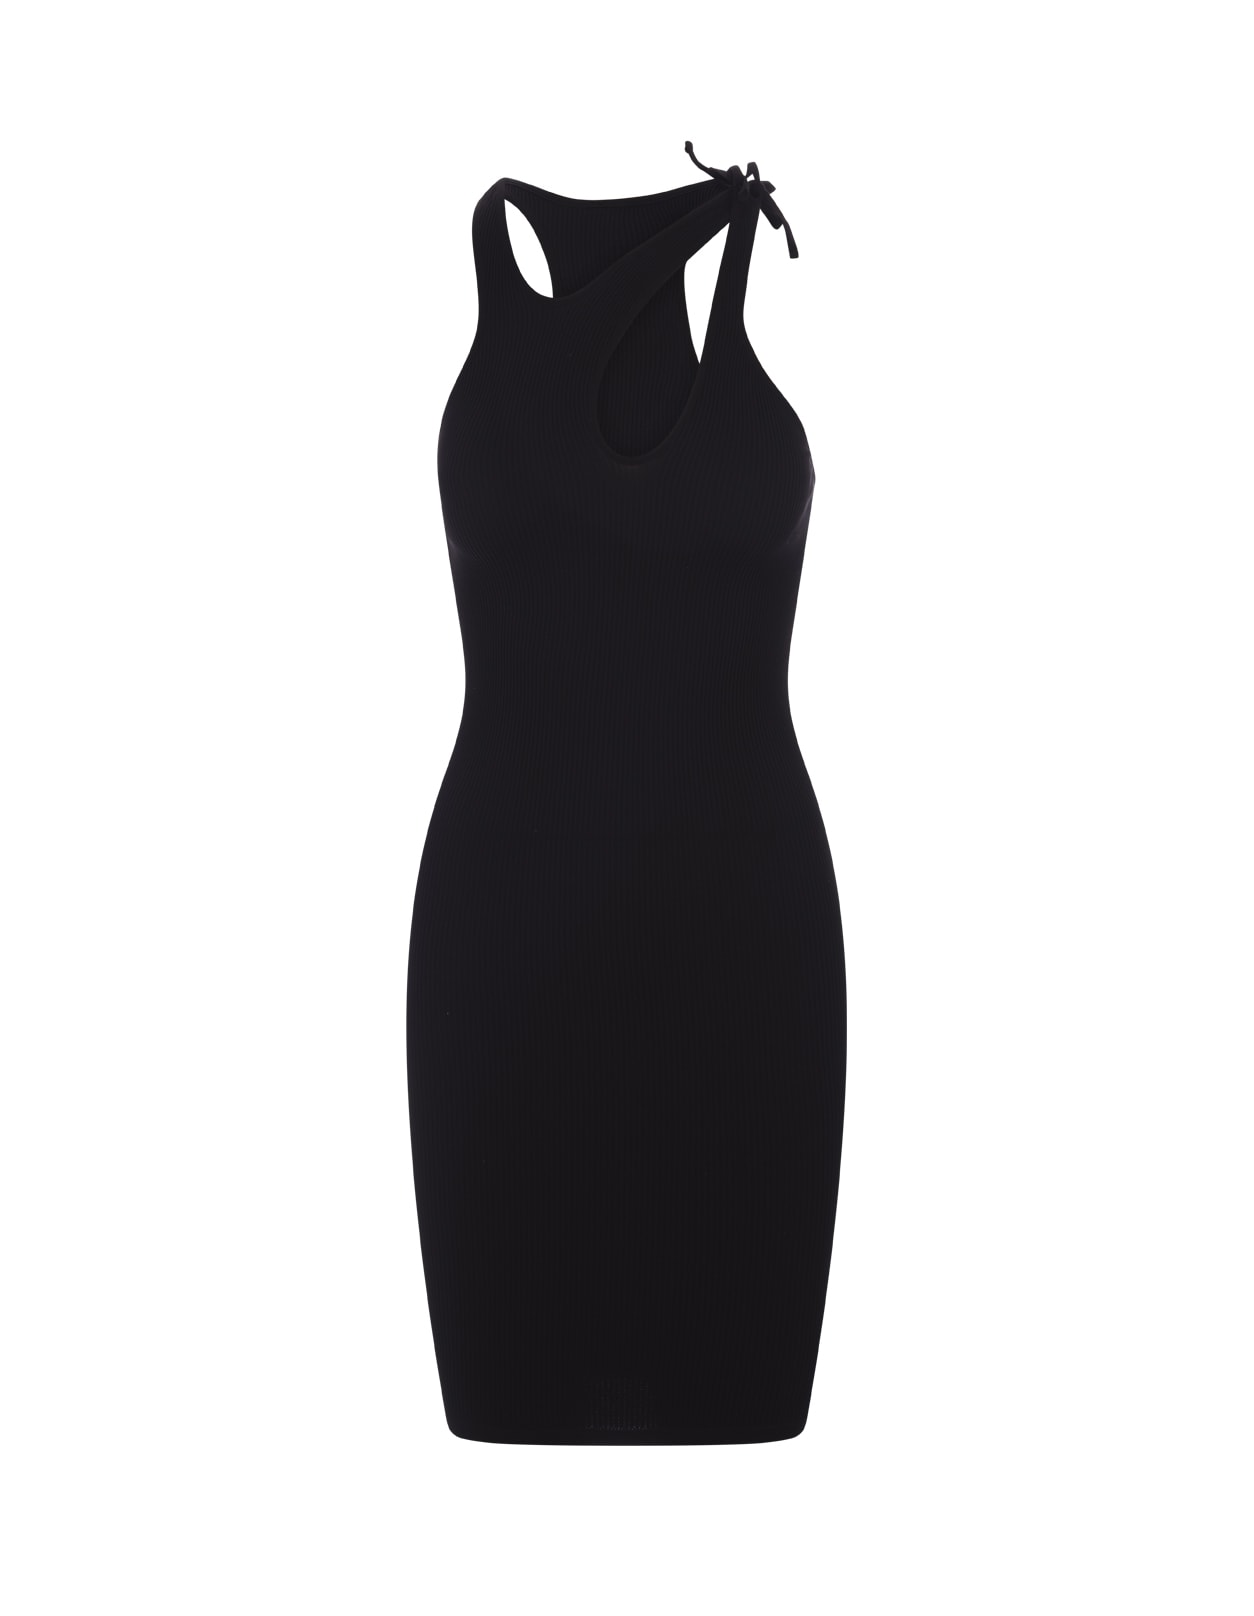 ANDREĀDAMO Black Short Sheath Dress With Cut-out